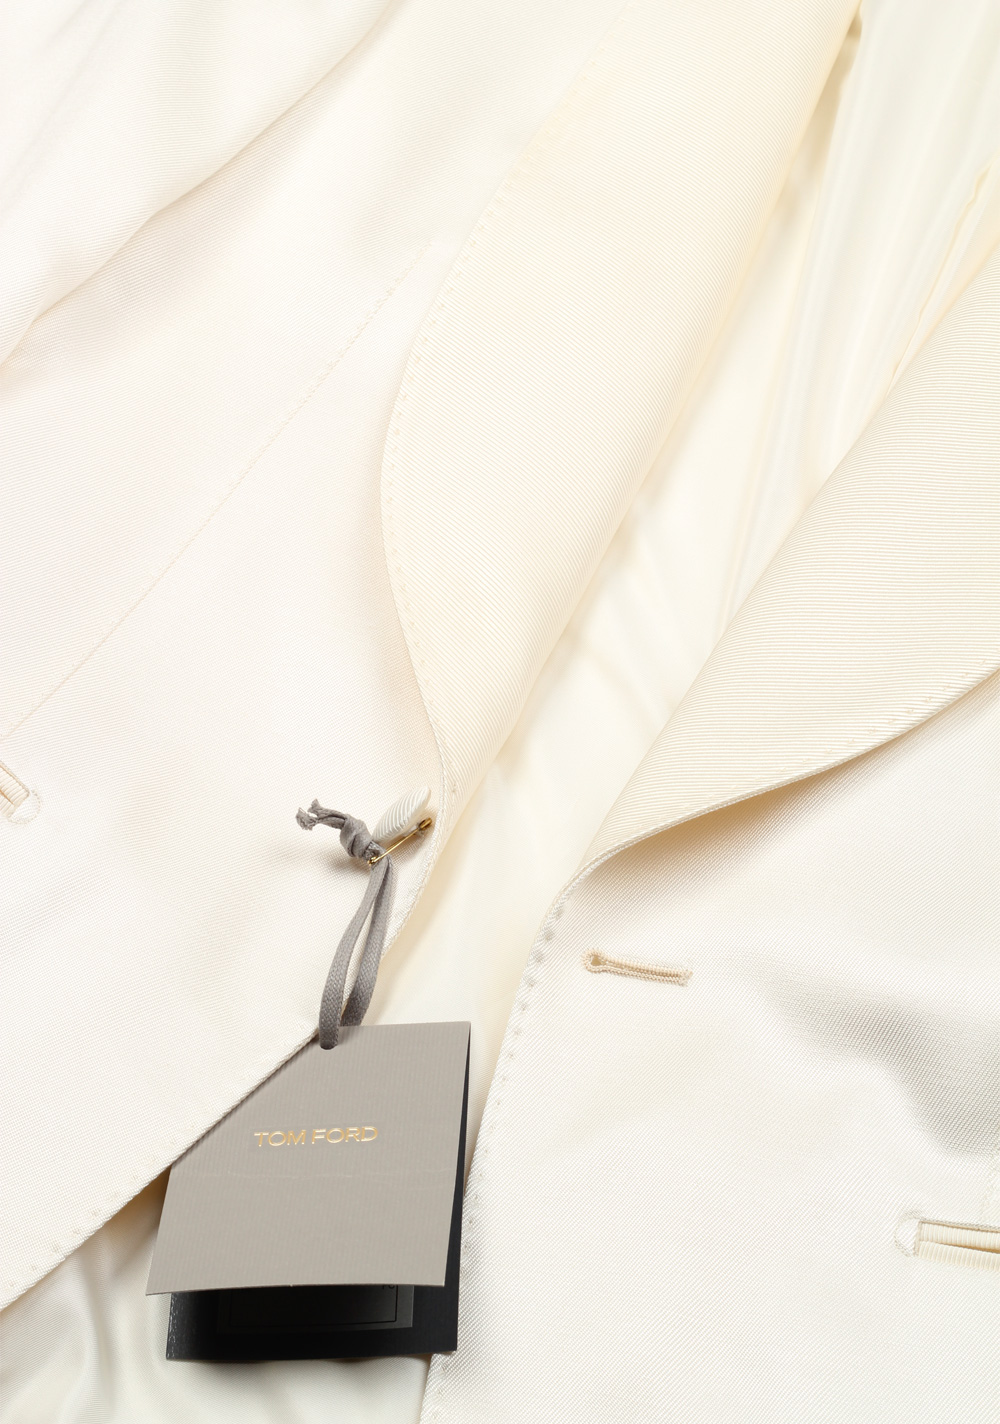 TOM FORD Shelton Shawl Collar Off White Sport Coat Tuxedo Dinner Jacket Size 46 / 36R U.S. | Costume Limité